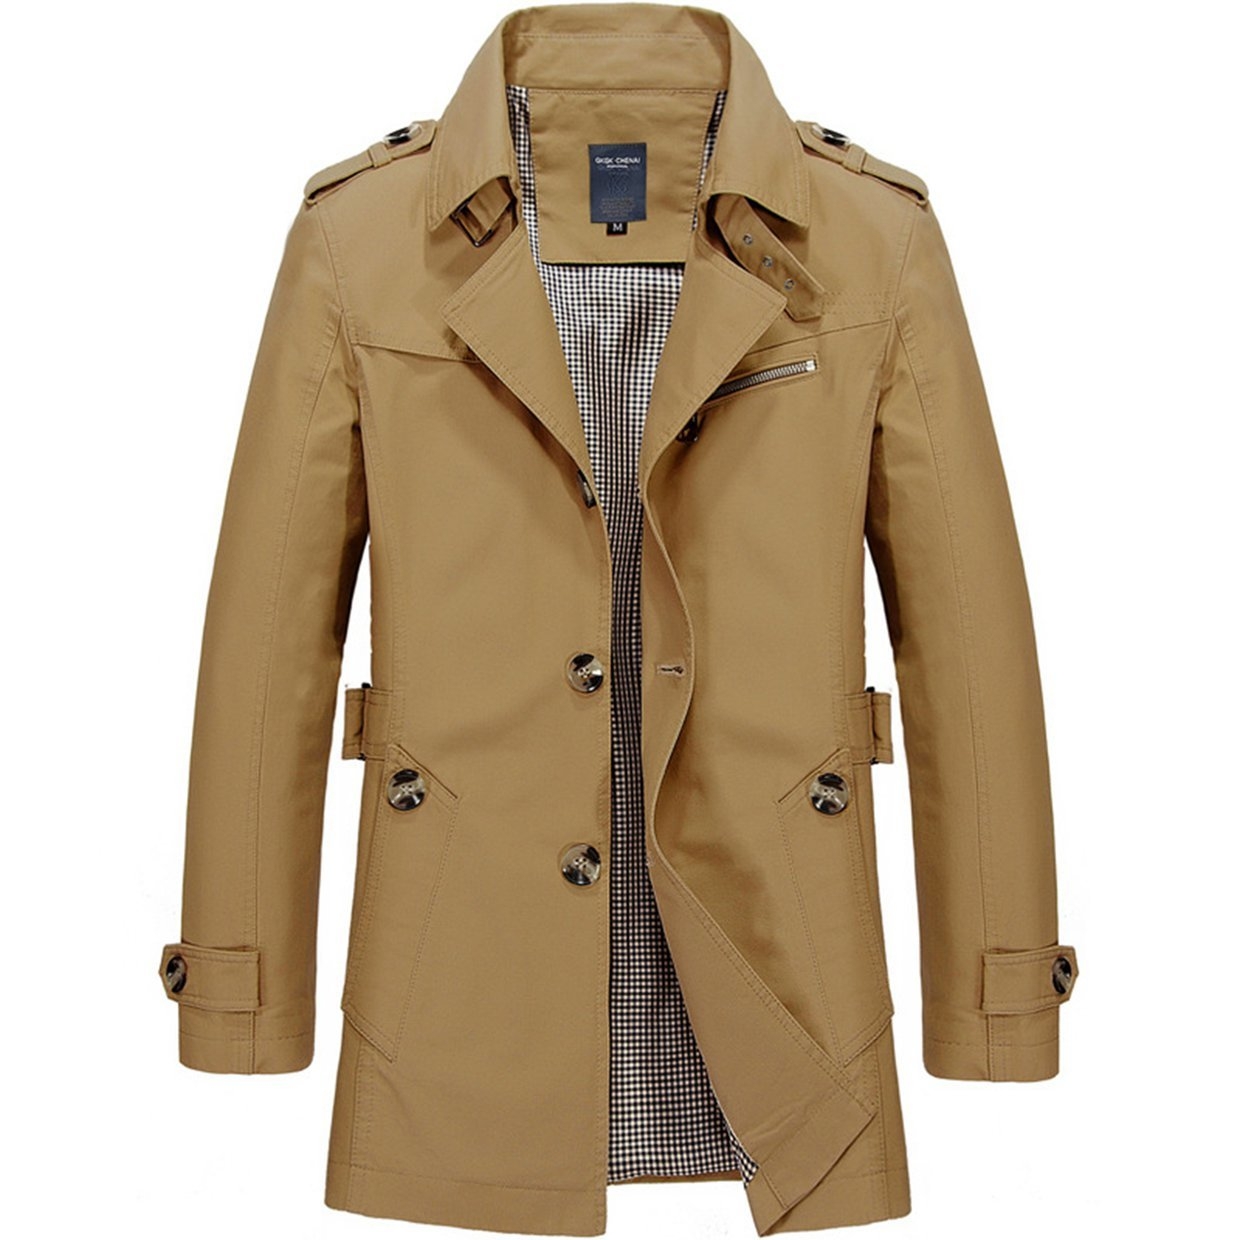 Shop Fashion Men Windbreaker Long Sleeve Jacket Casual Loose Coat ...